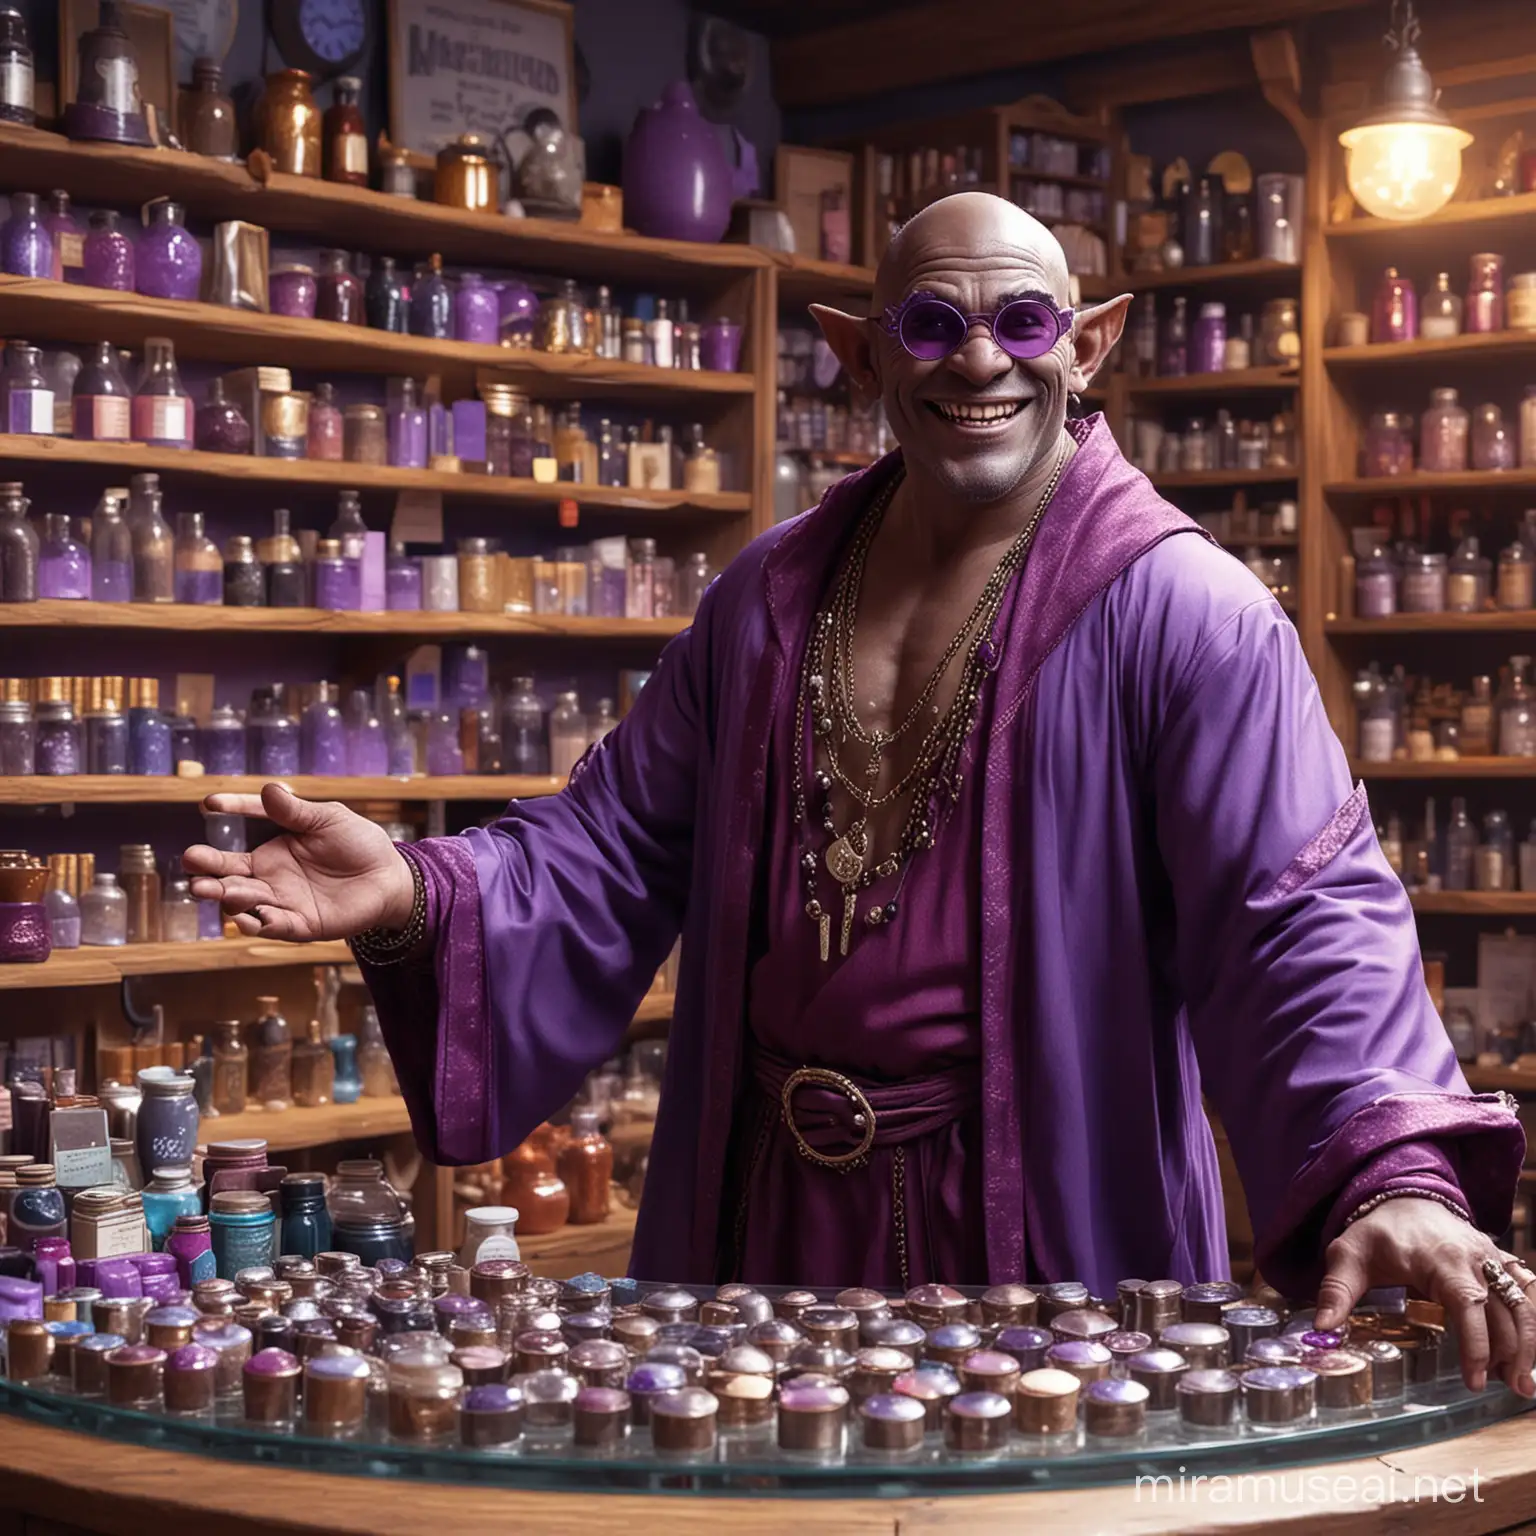 Eccentric Male Orc Shopkeeper in Flamboyant Purple Robes Dancing Amidst Magic Store Wonders